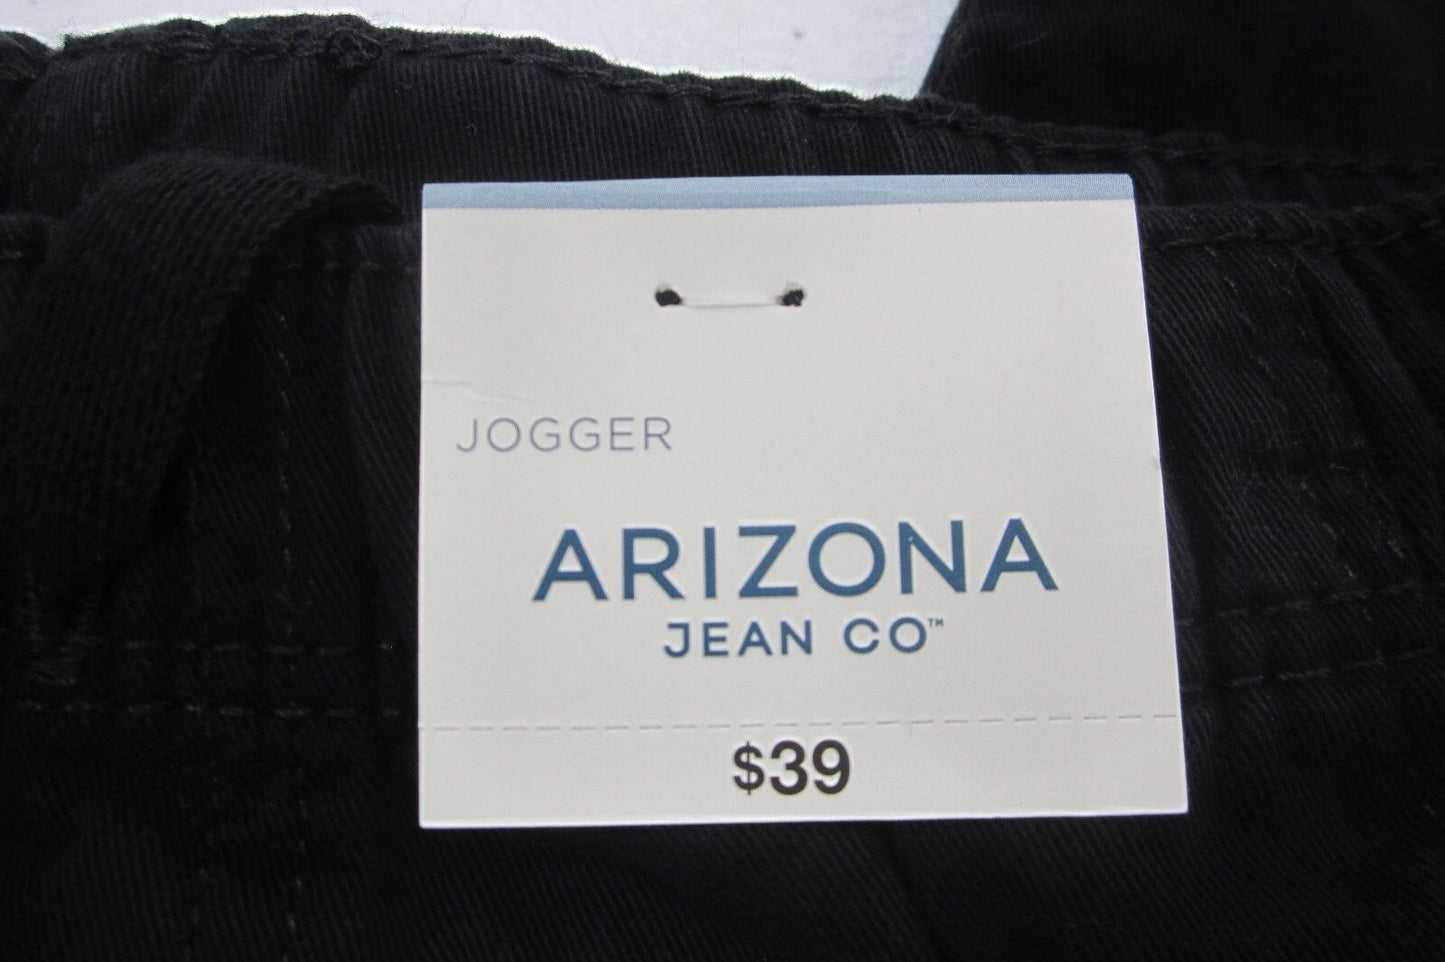 *NWT*   Arizona Jean Co. Boys JOGGER Black Pants Size 7R